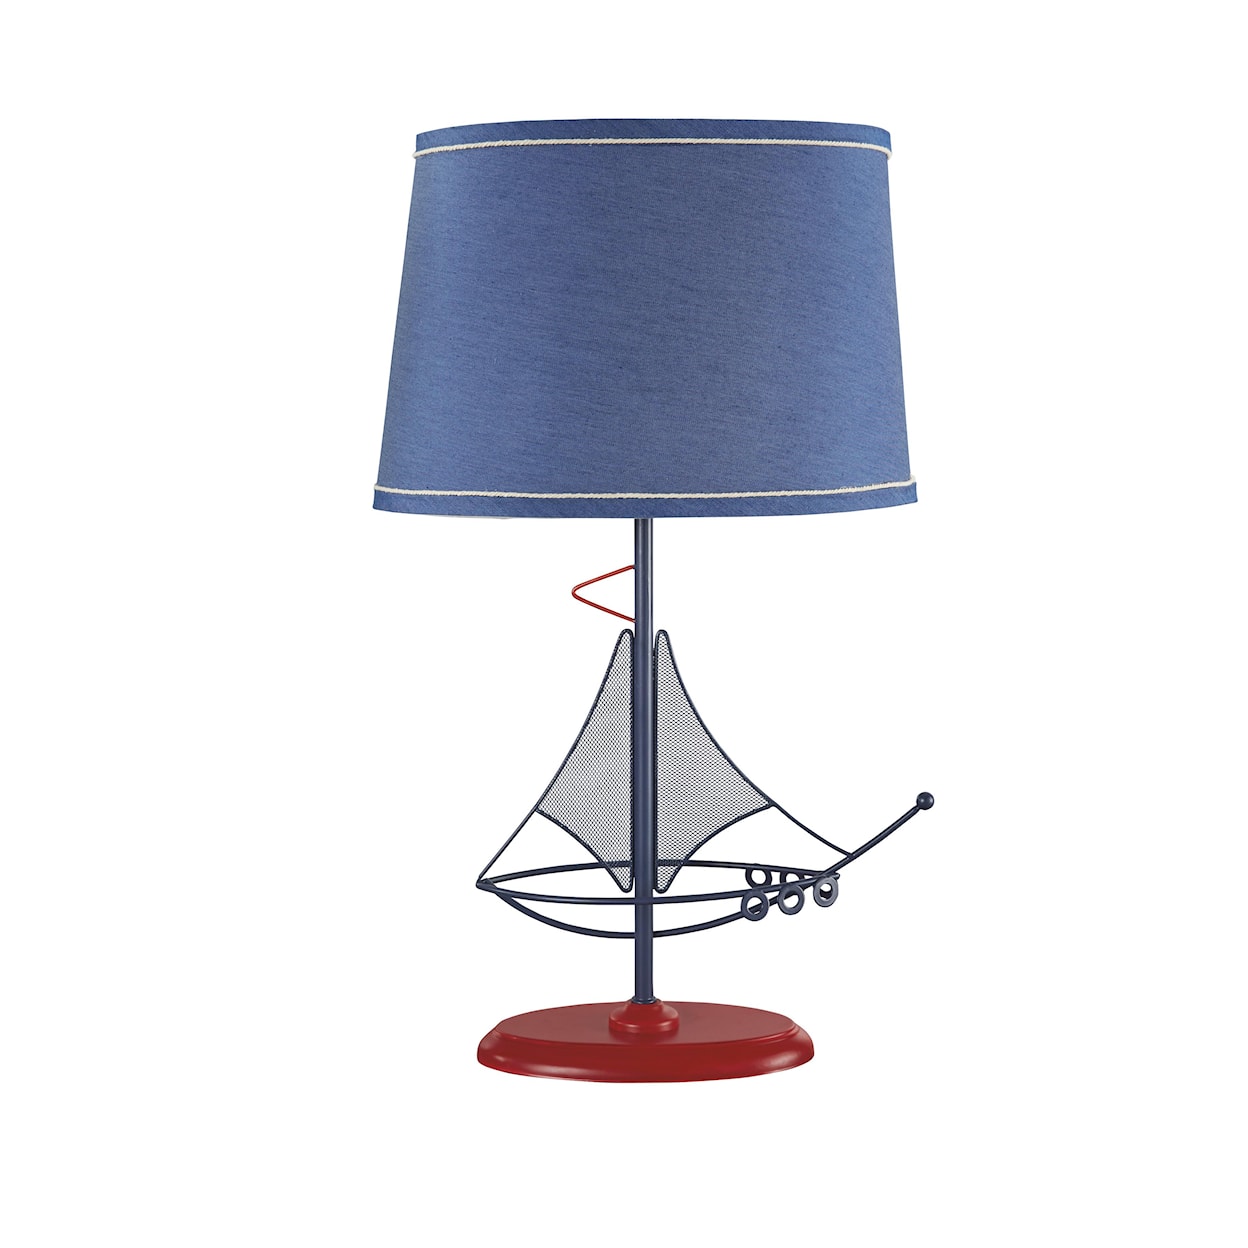 Ashley Furniture Signature Design Lamps - Vintage Style Sailor Metal Table Lamp